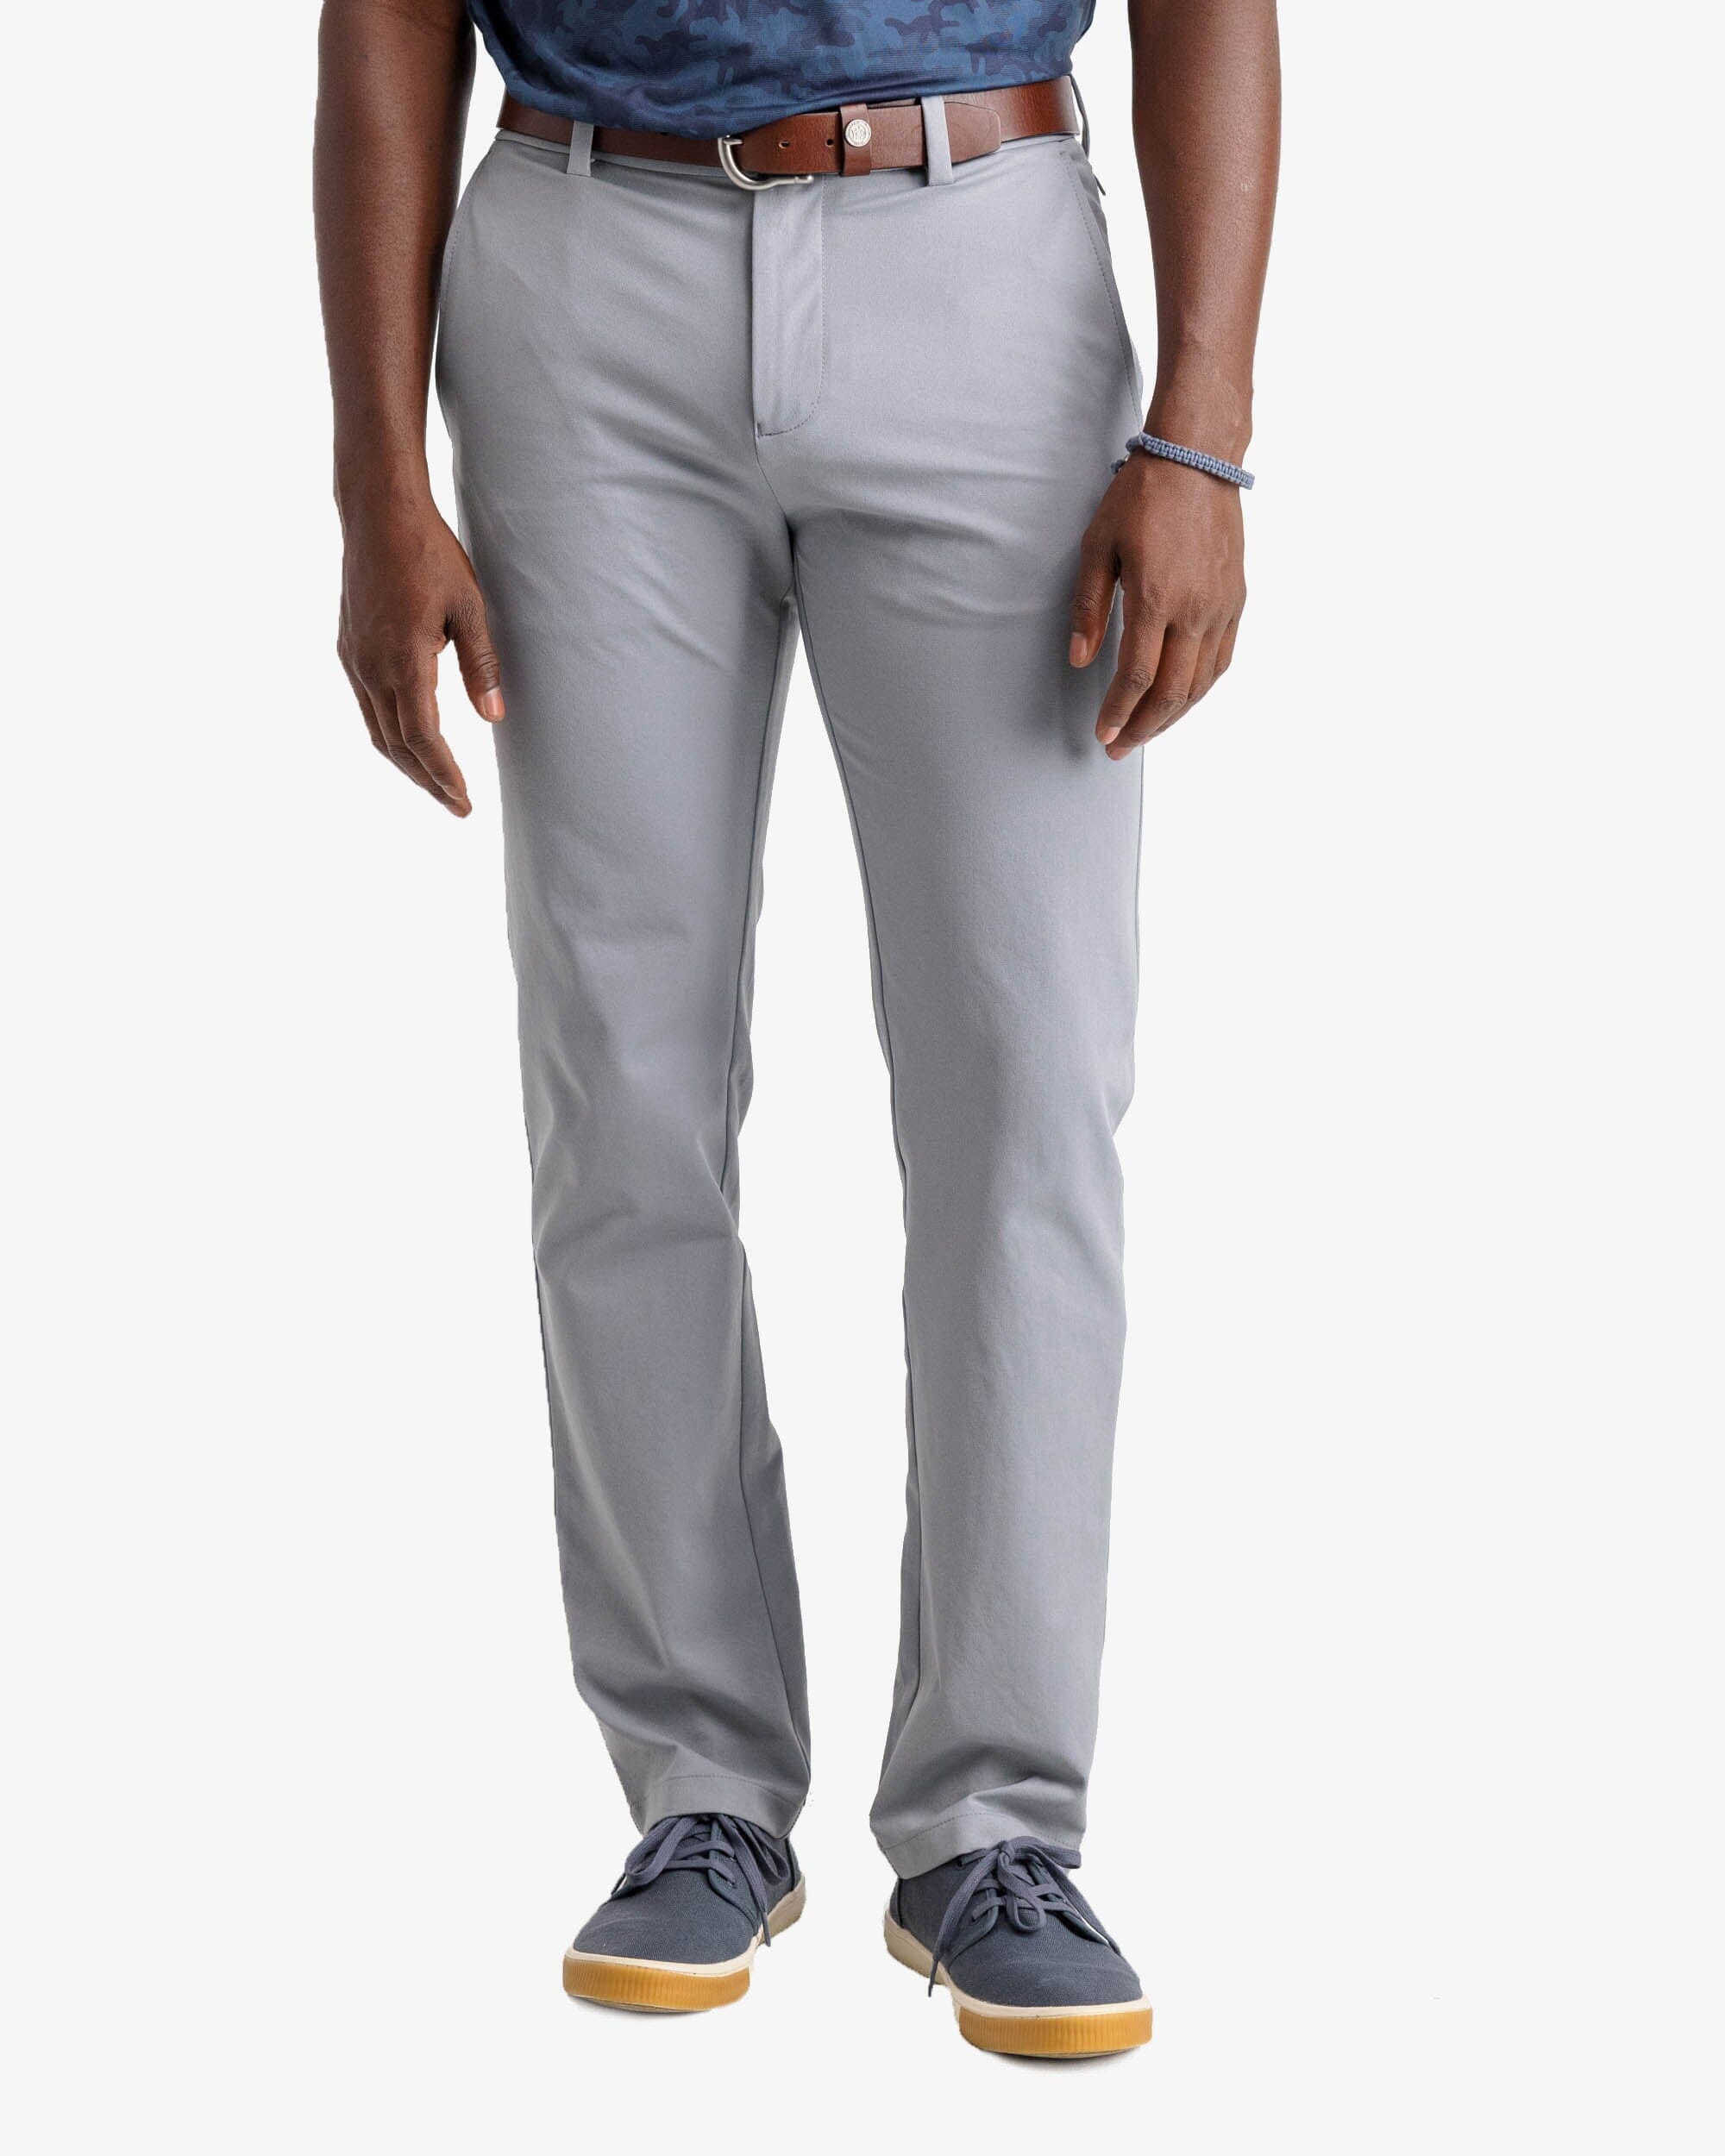 Buy ANDAMEN Green Slim Fit Chinos for Men's Online @ Tata CLiQ